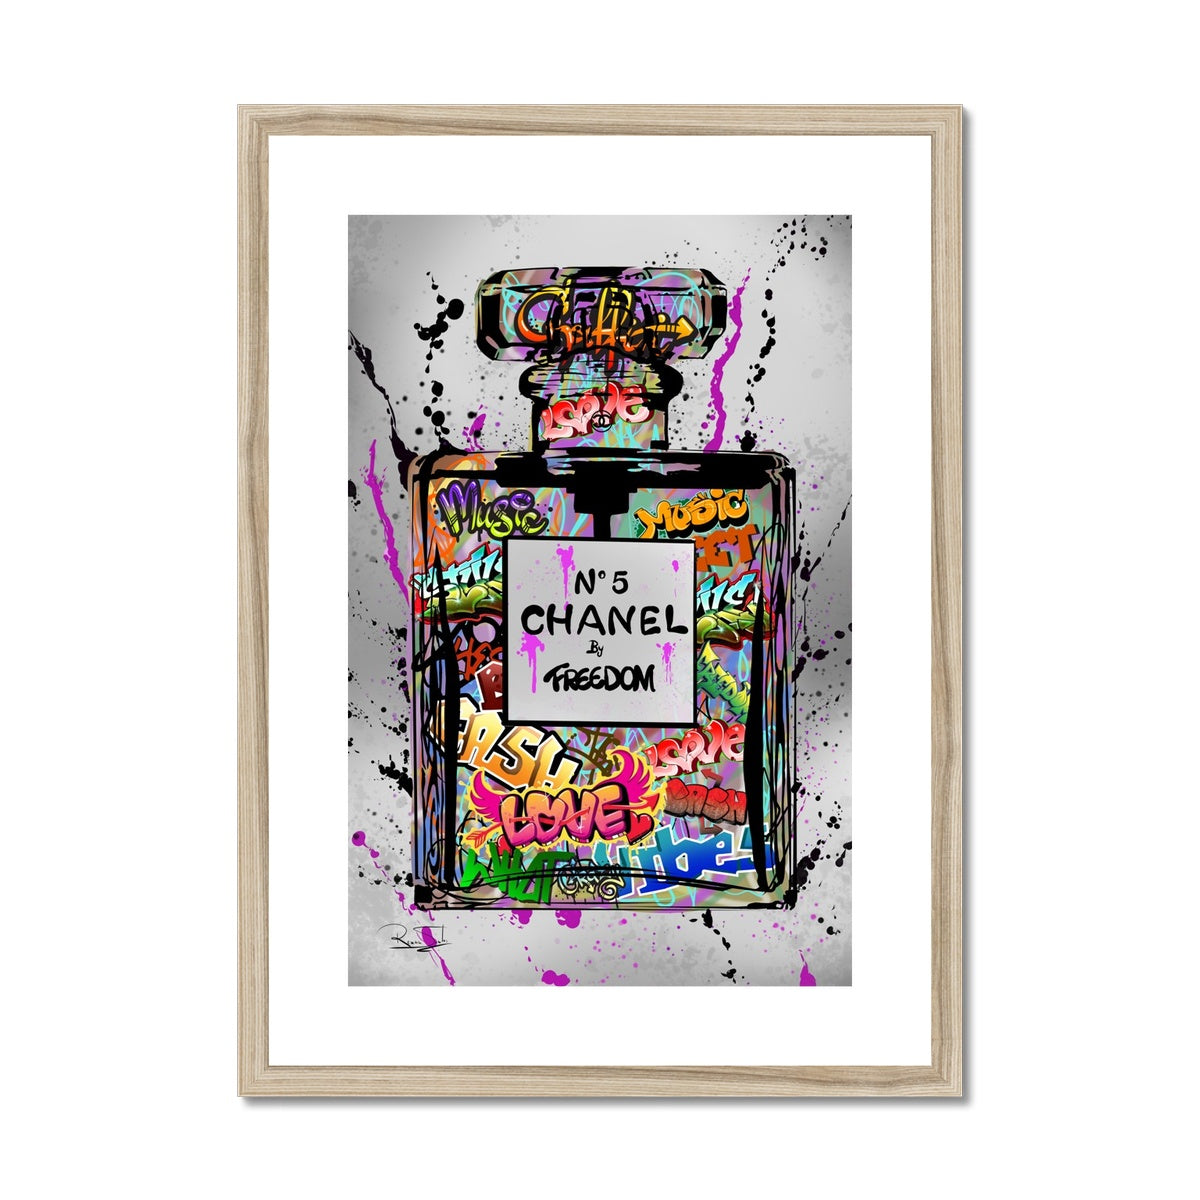 Chanel No5 - Framed Print